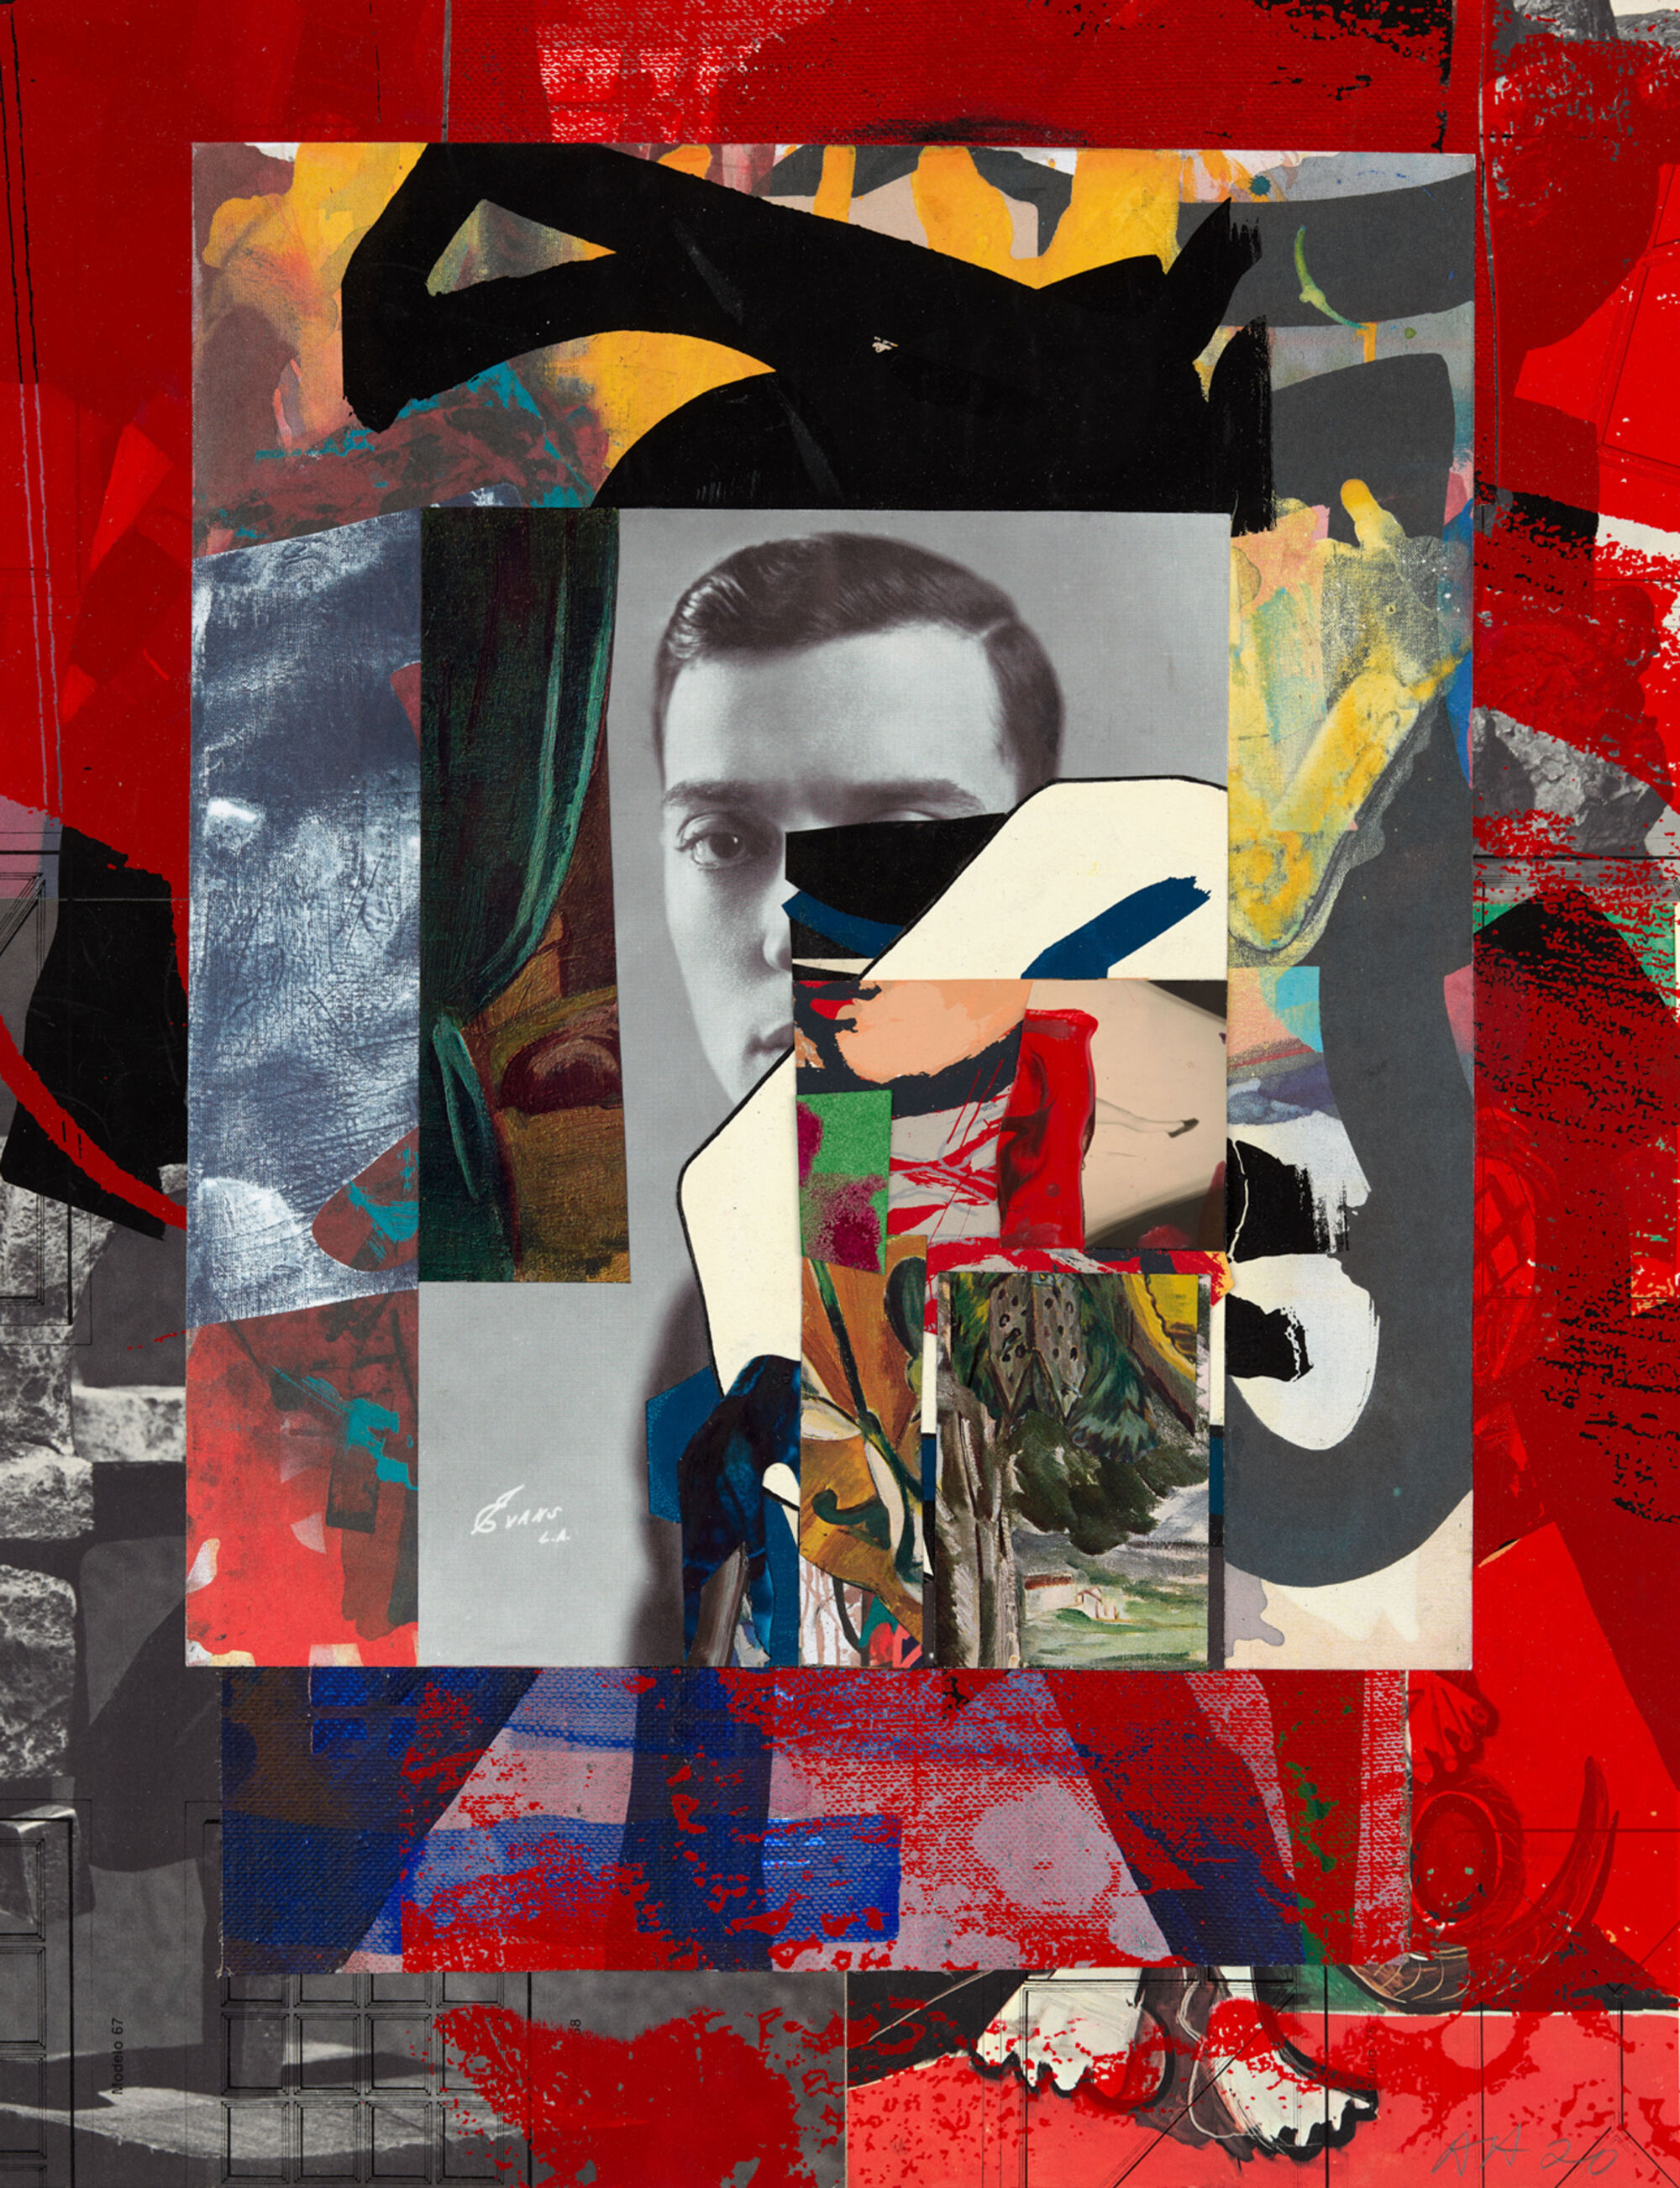 The Wick - Arturo Herrera 
Untitled 2020
mixed media collage
50 x 30 cm.
19 3/4x 113/4 in.
© Arturo Herrera, Courtesy the artist, Thomas Dane Gallery
and Sikkema Jenkins & Co., New York